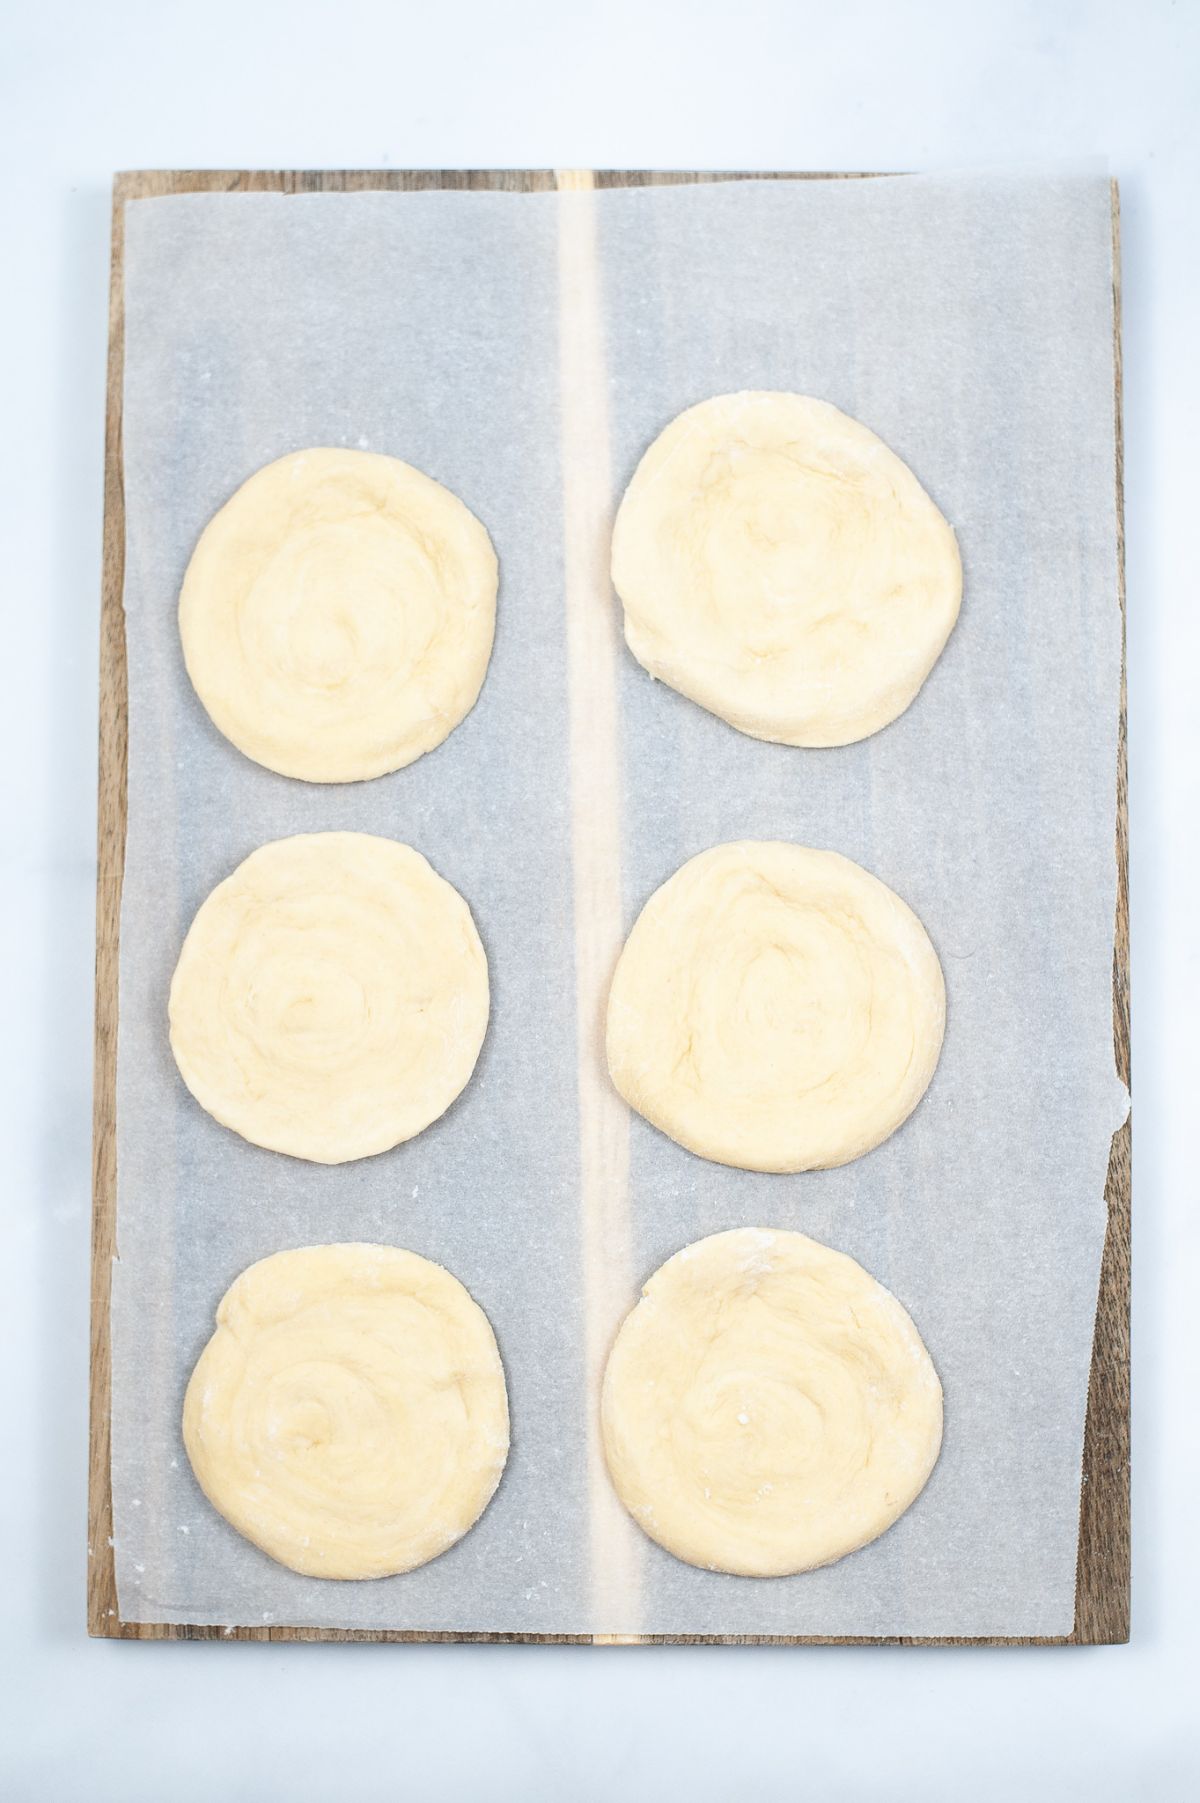 6 pcs Danish dough flattened in 2-3 inch circles